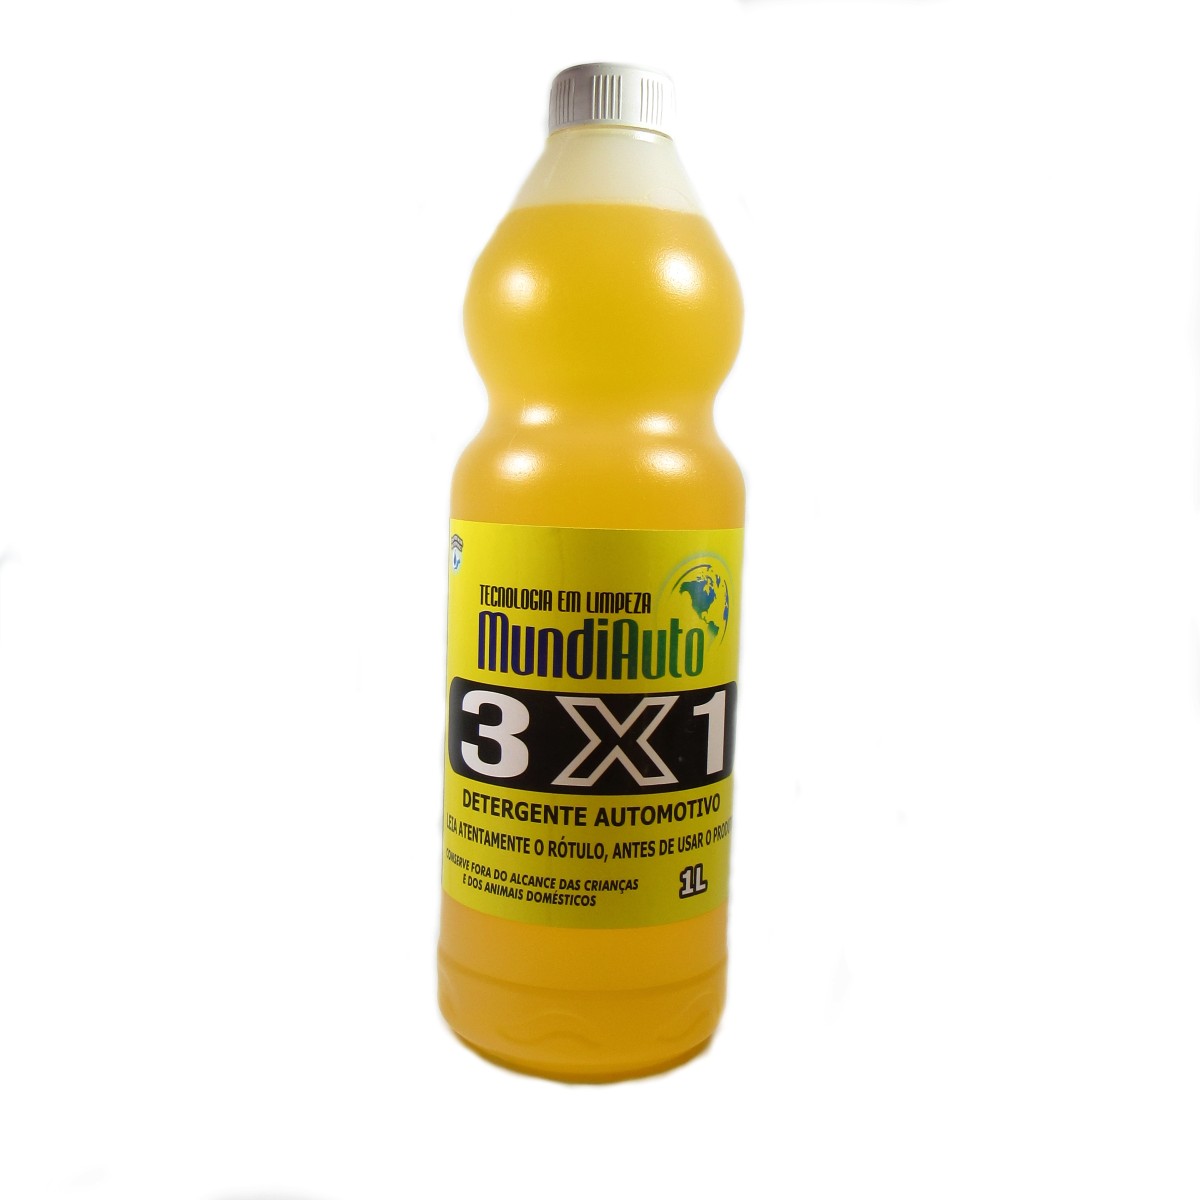 Detergente Automotivo 3x1  1 litro - Mundiauto